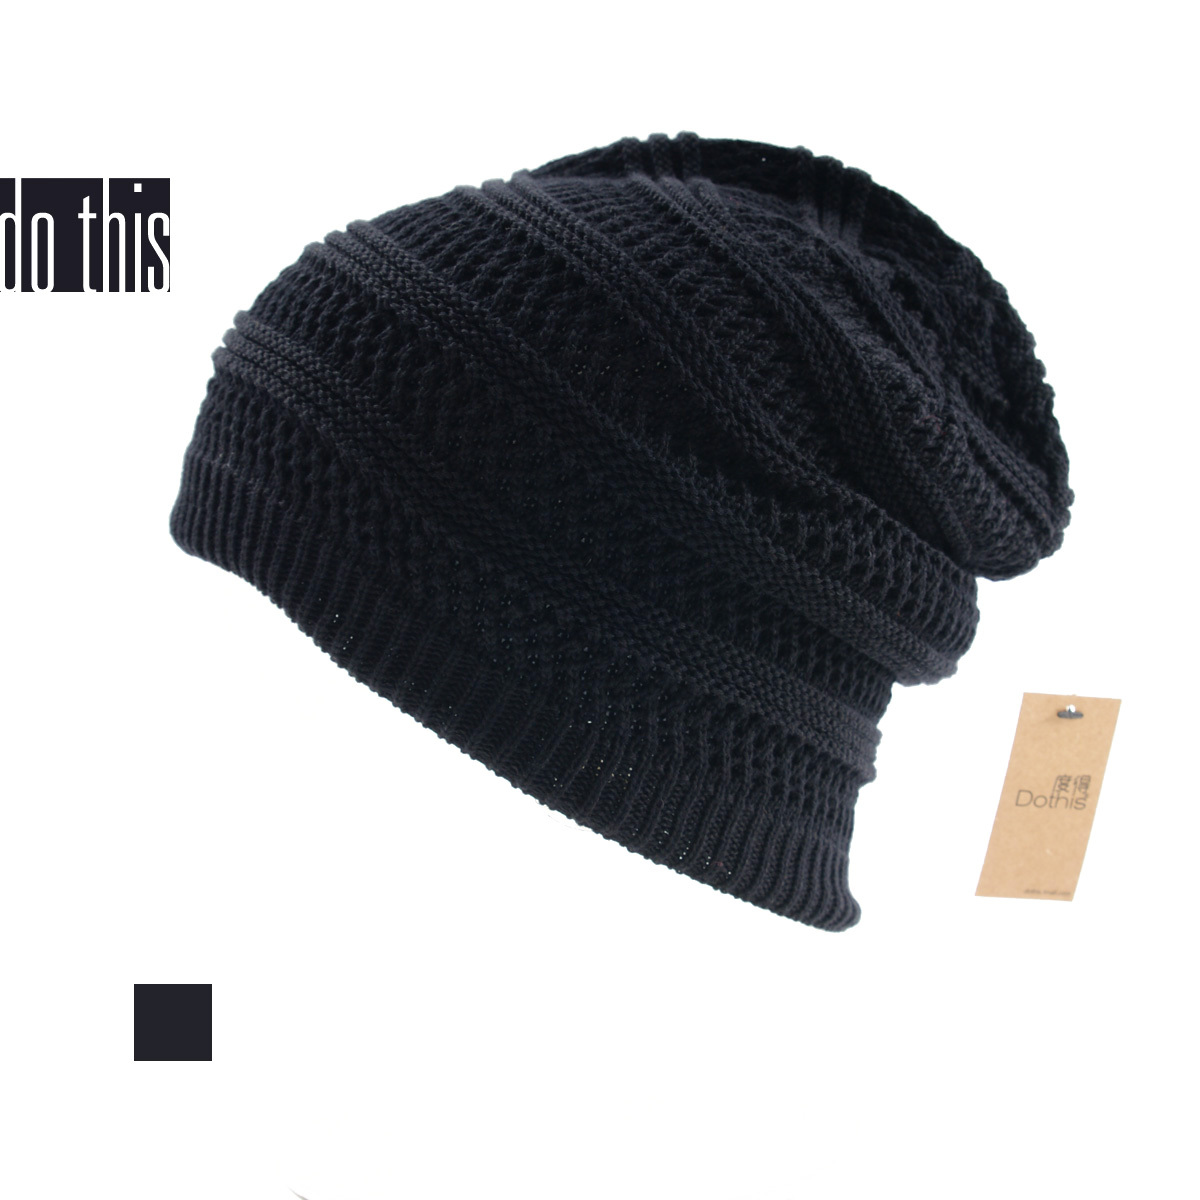 Dothis winter black plain brief thickening knitted hat 1m1033